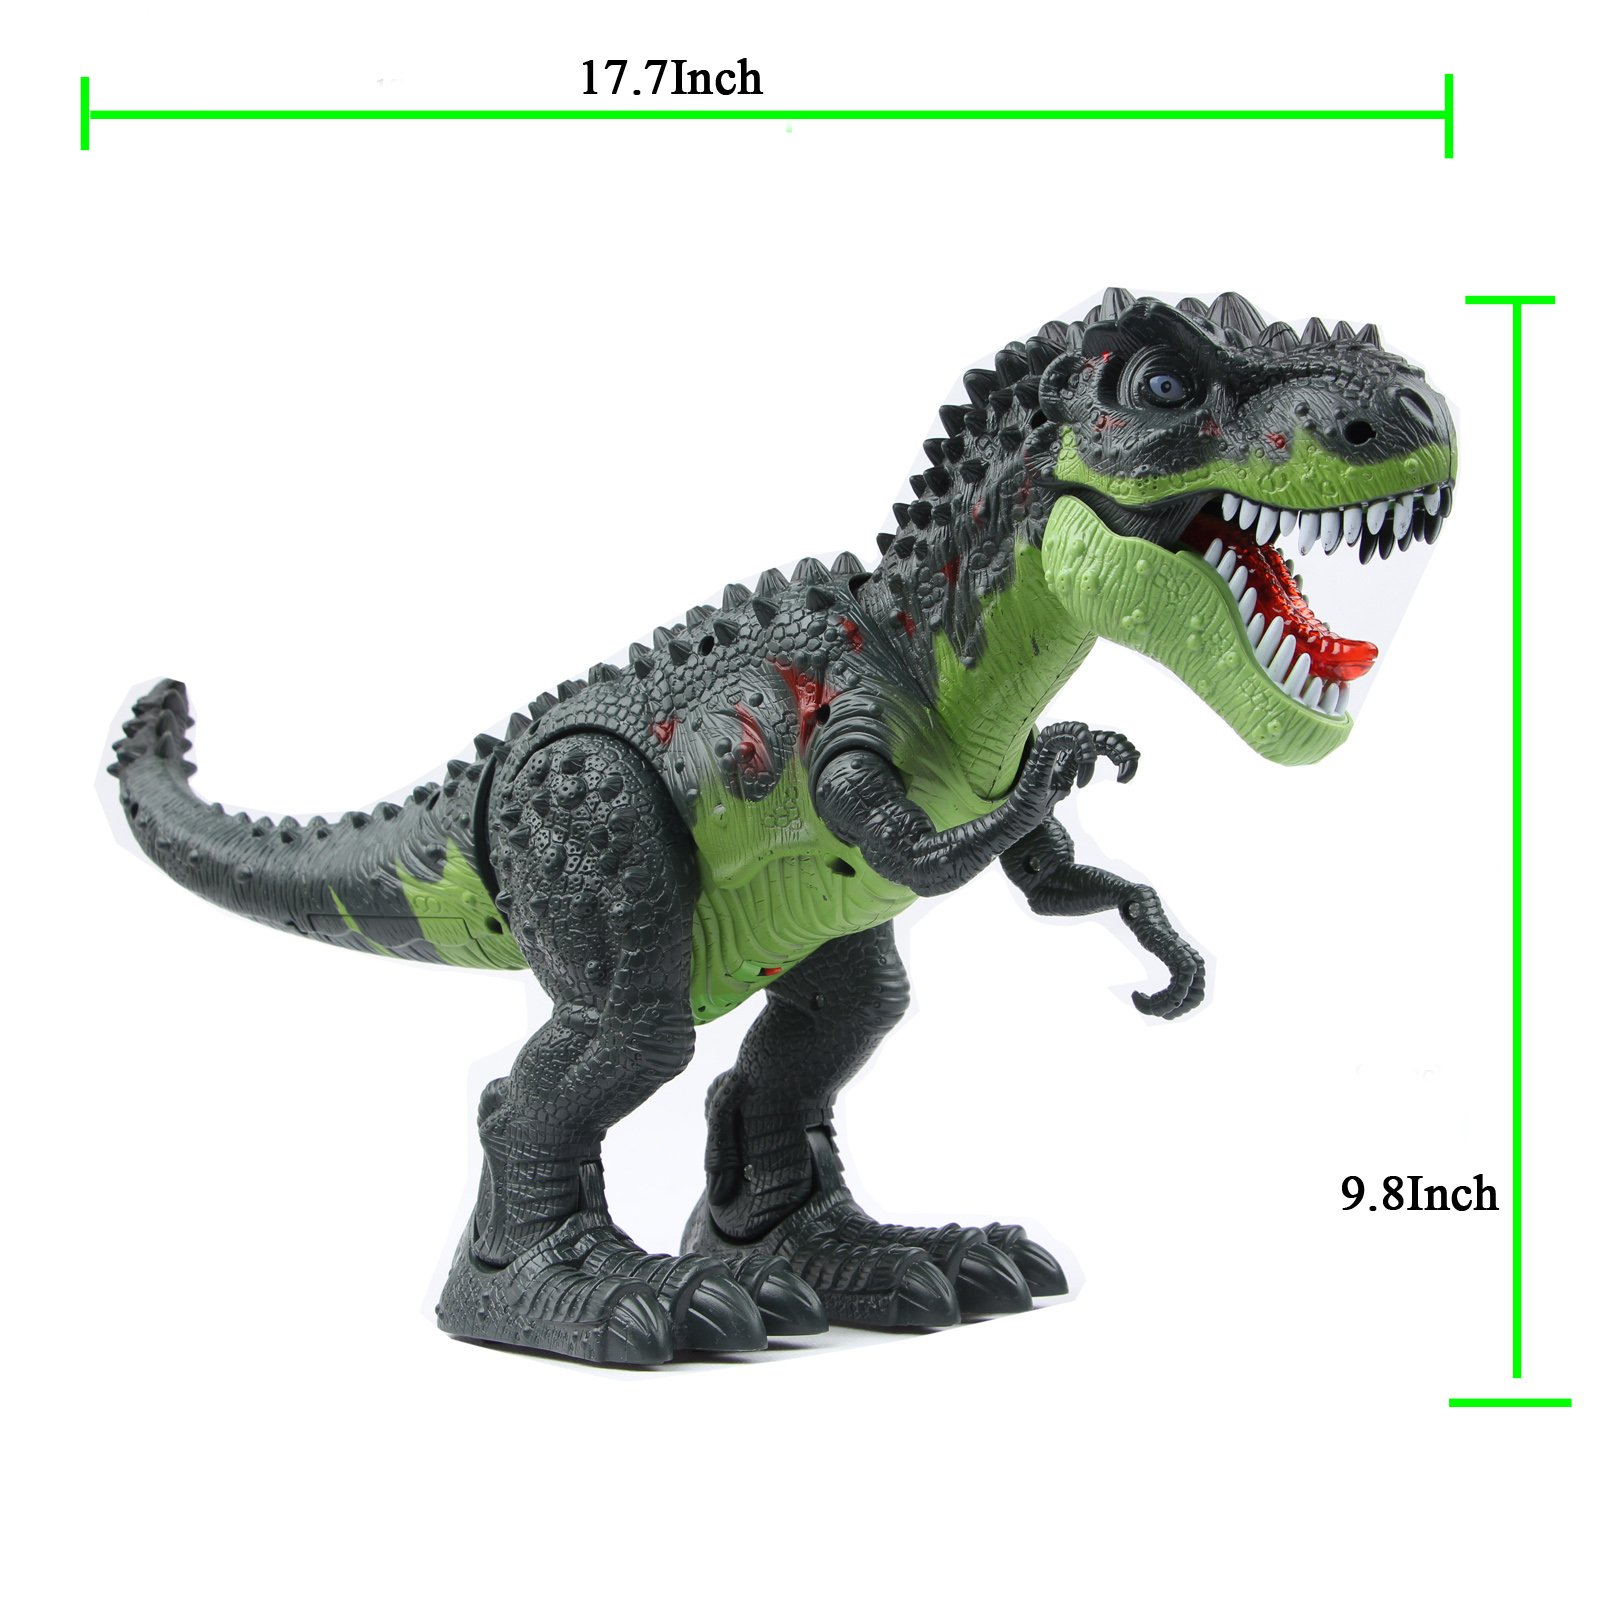 Sun Cling® Electronic Toys Green Walking Tyrannosaurus Rex Dinosaur